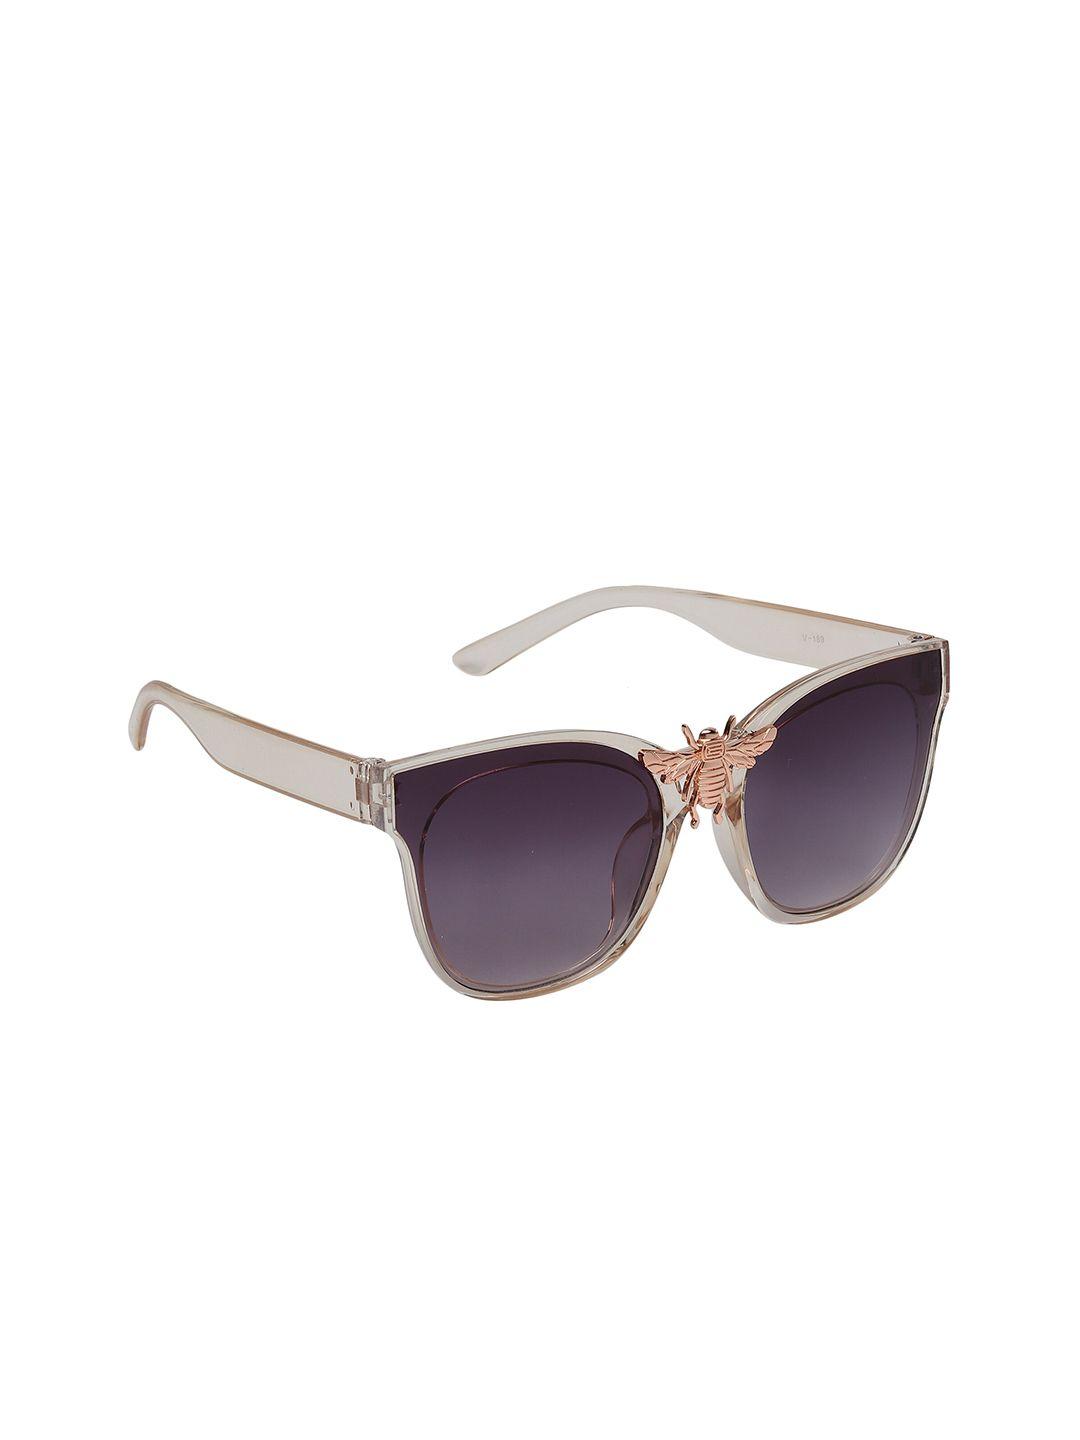 CELEBRITY SUNGLASSES Unisex Purple Nora Style Wayfarer Sunglasses